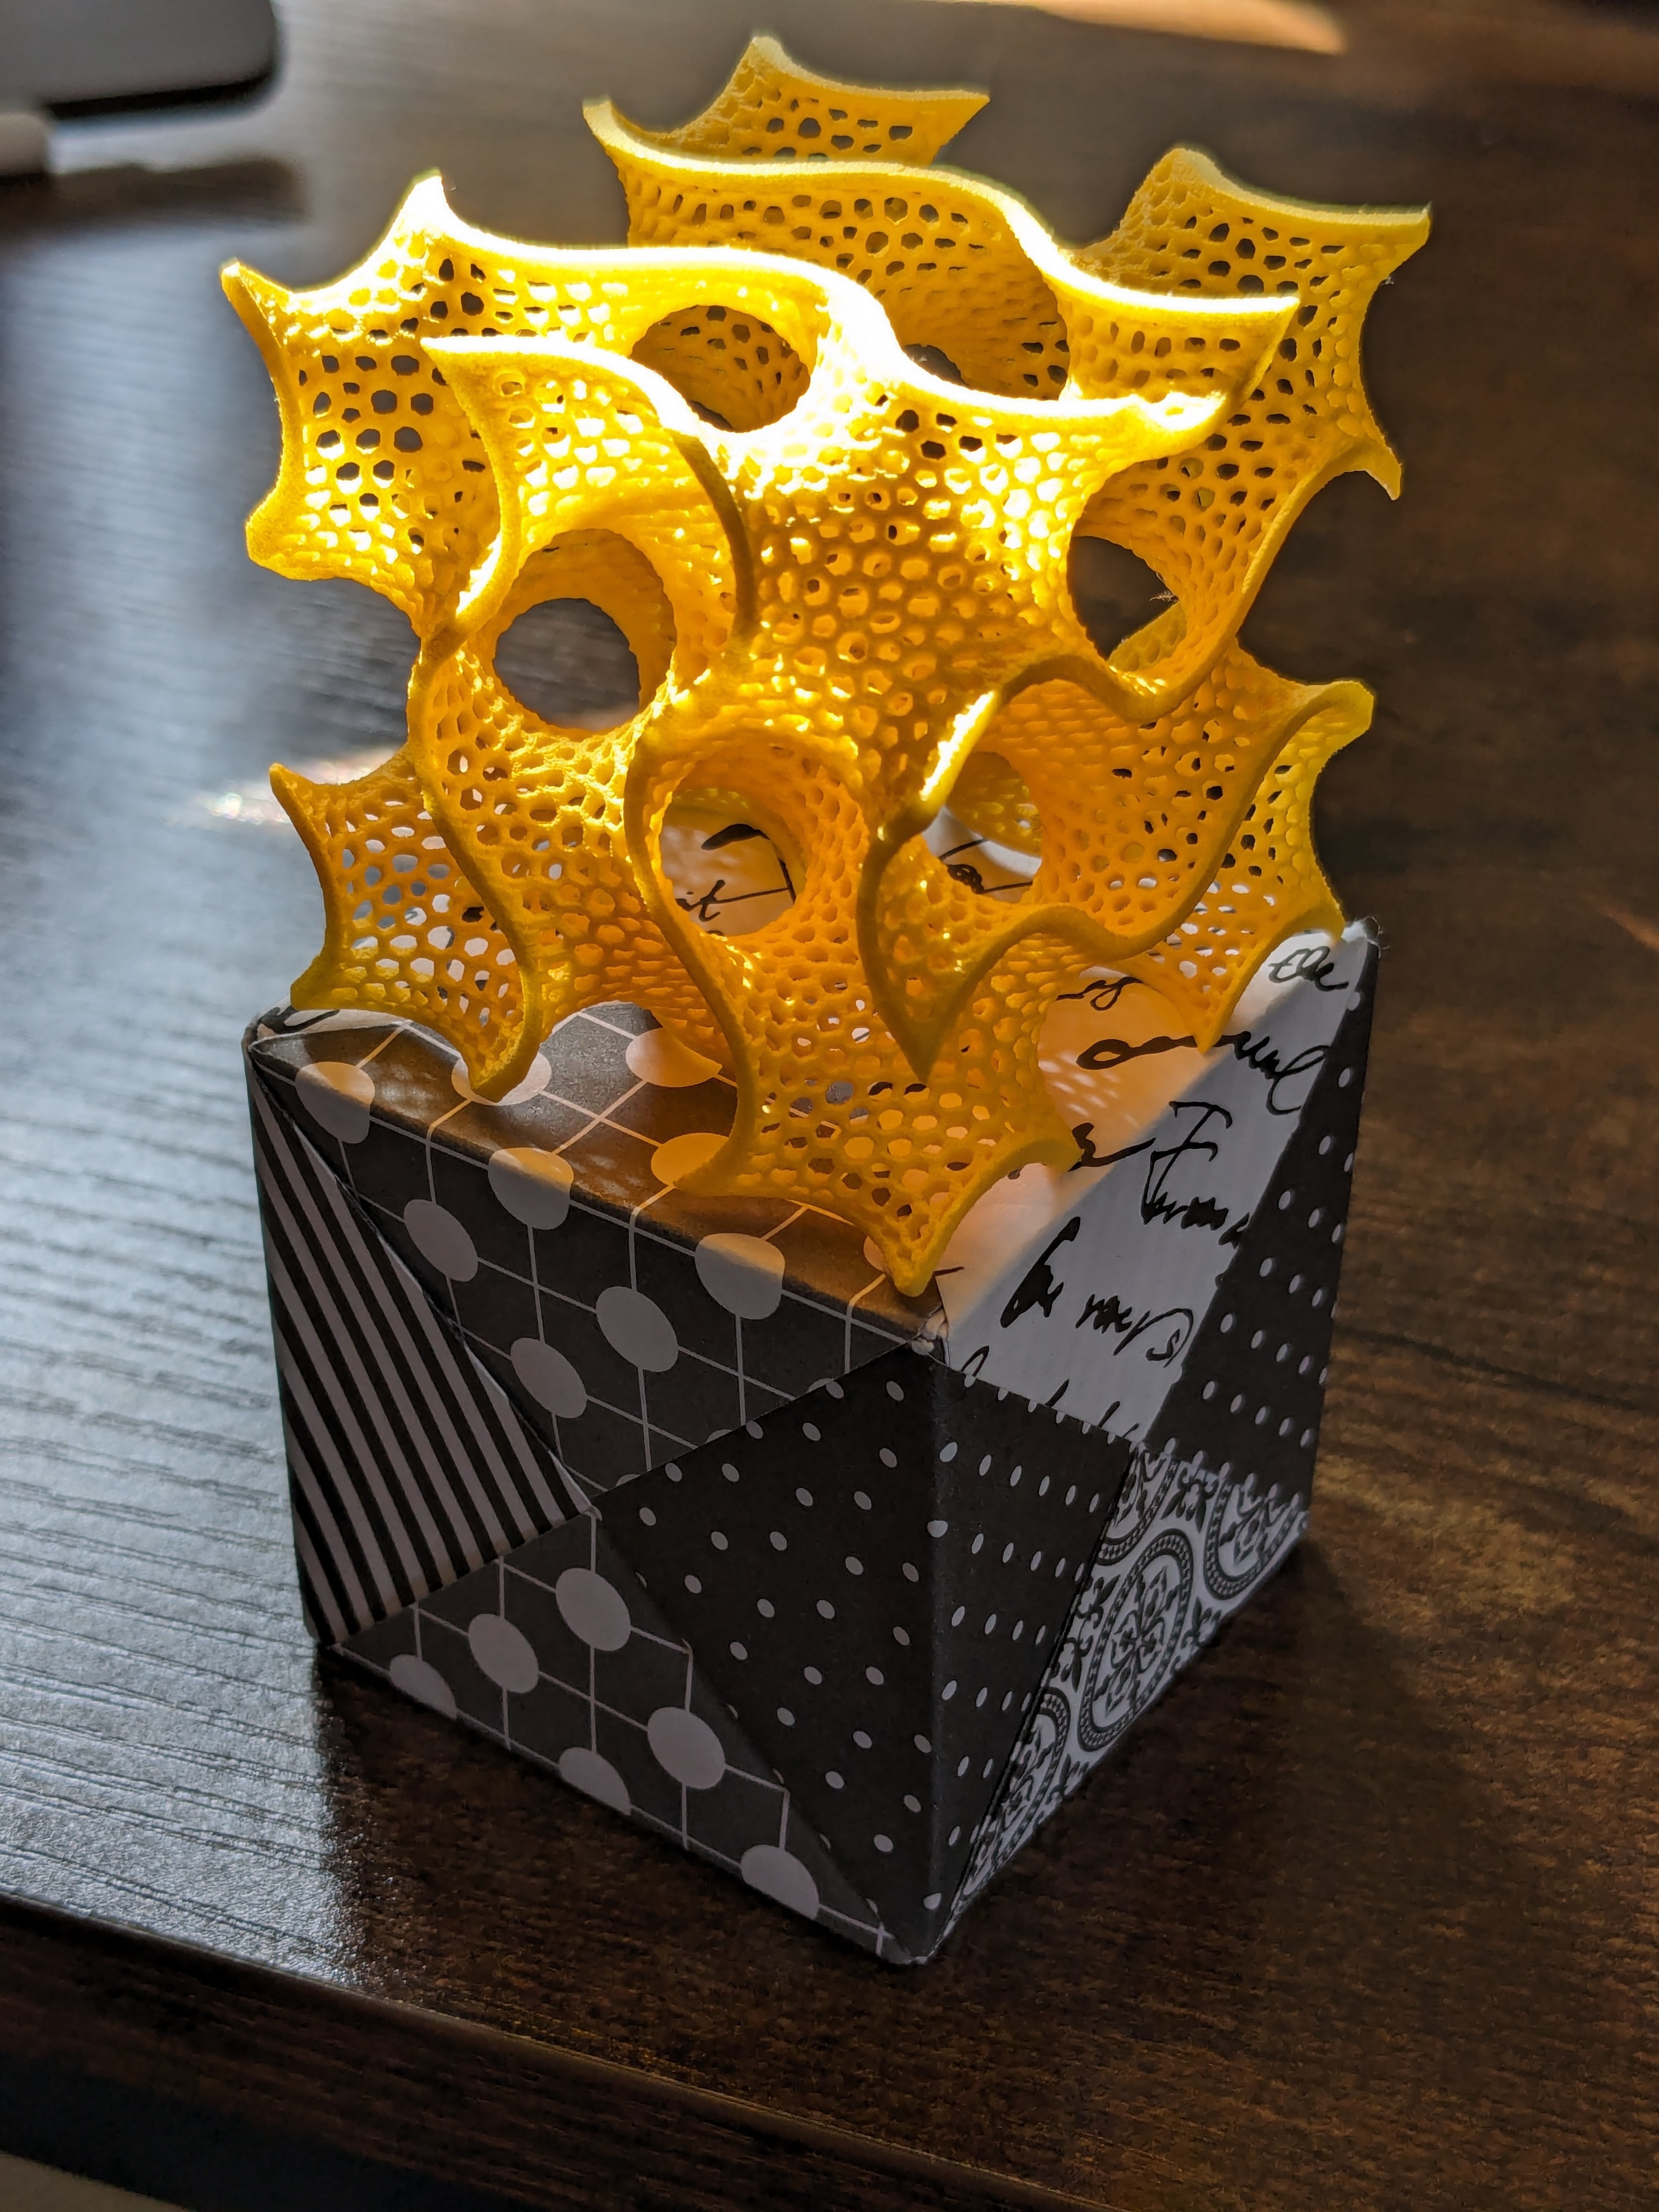 Gyroid model sitting on origami cube